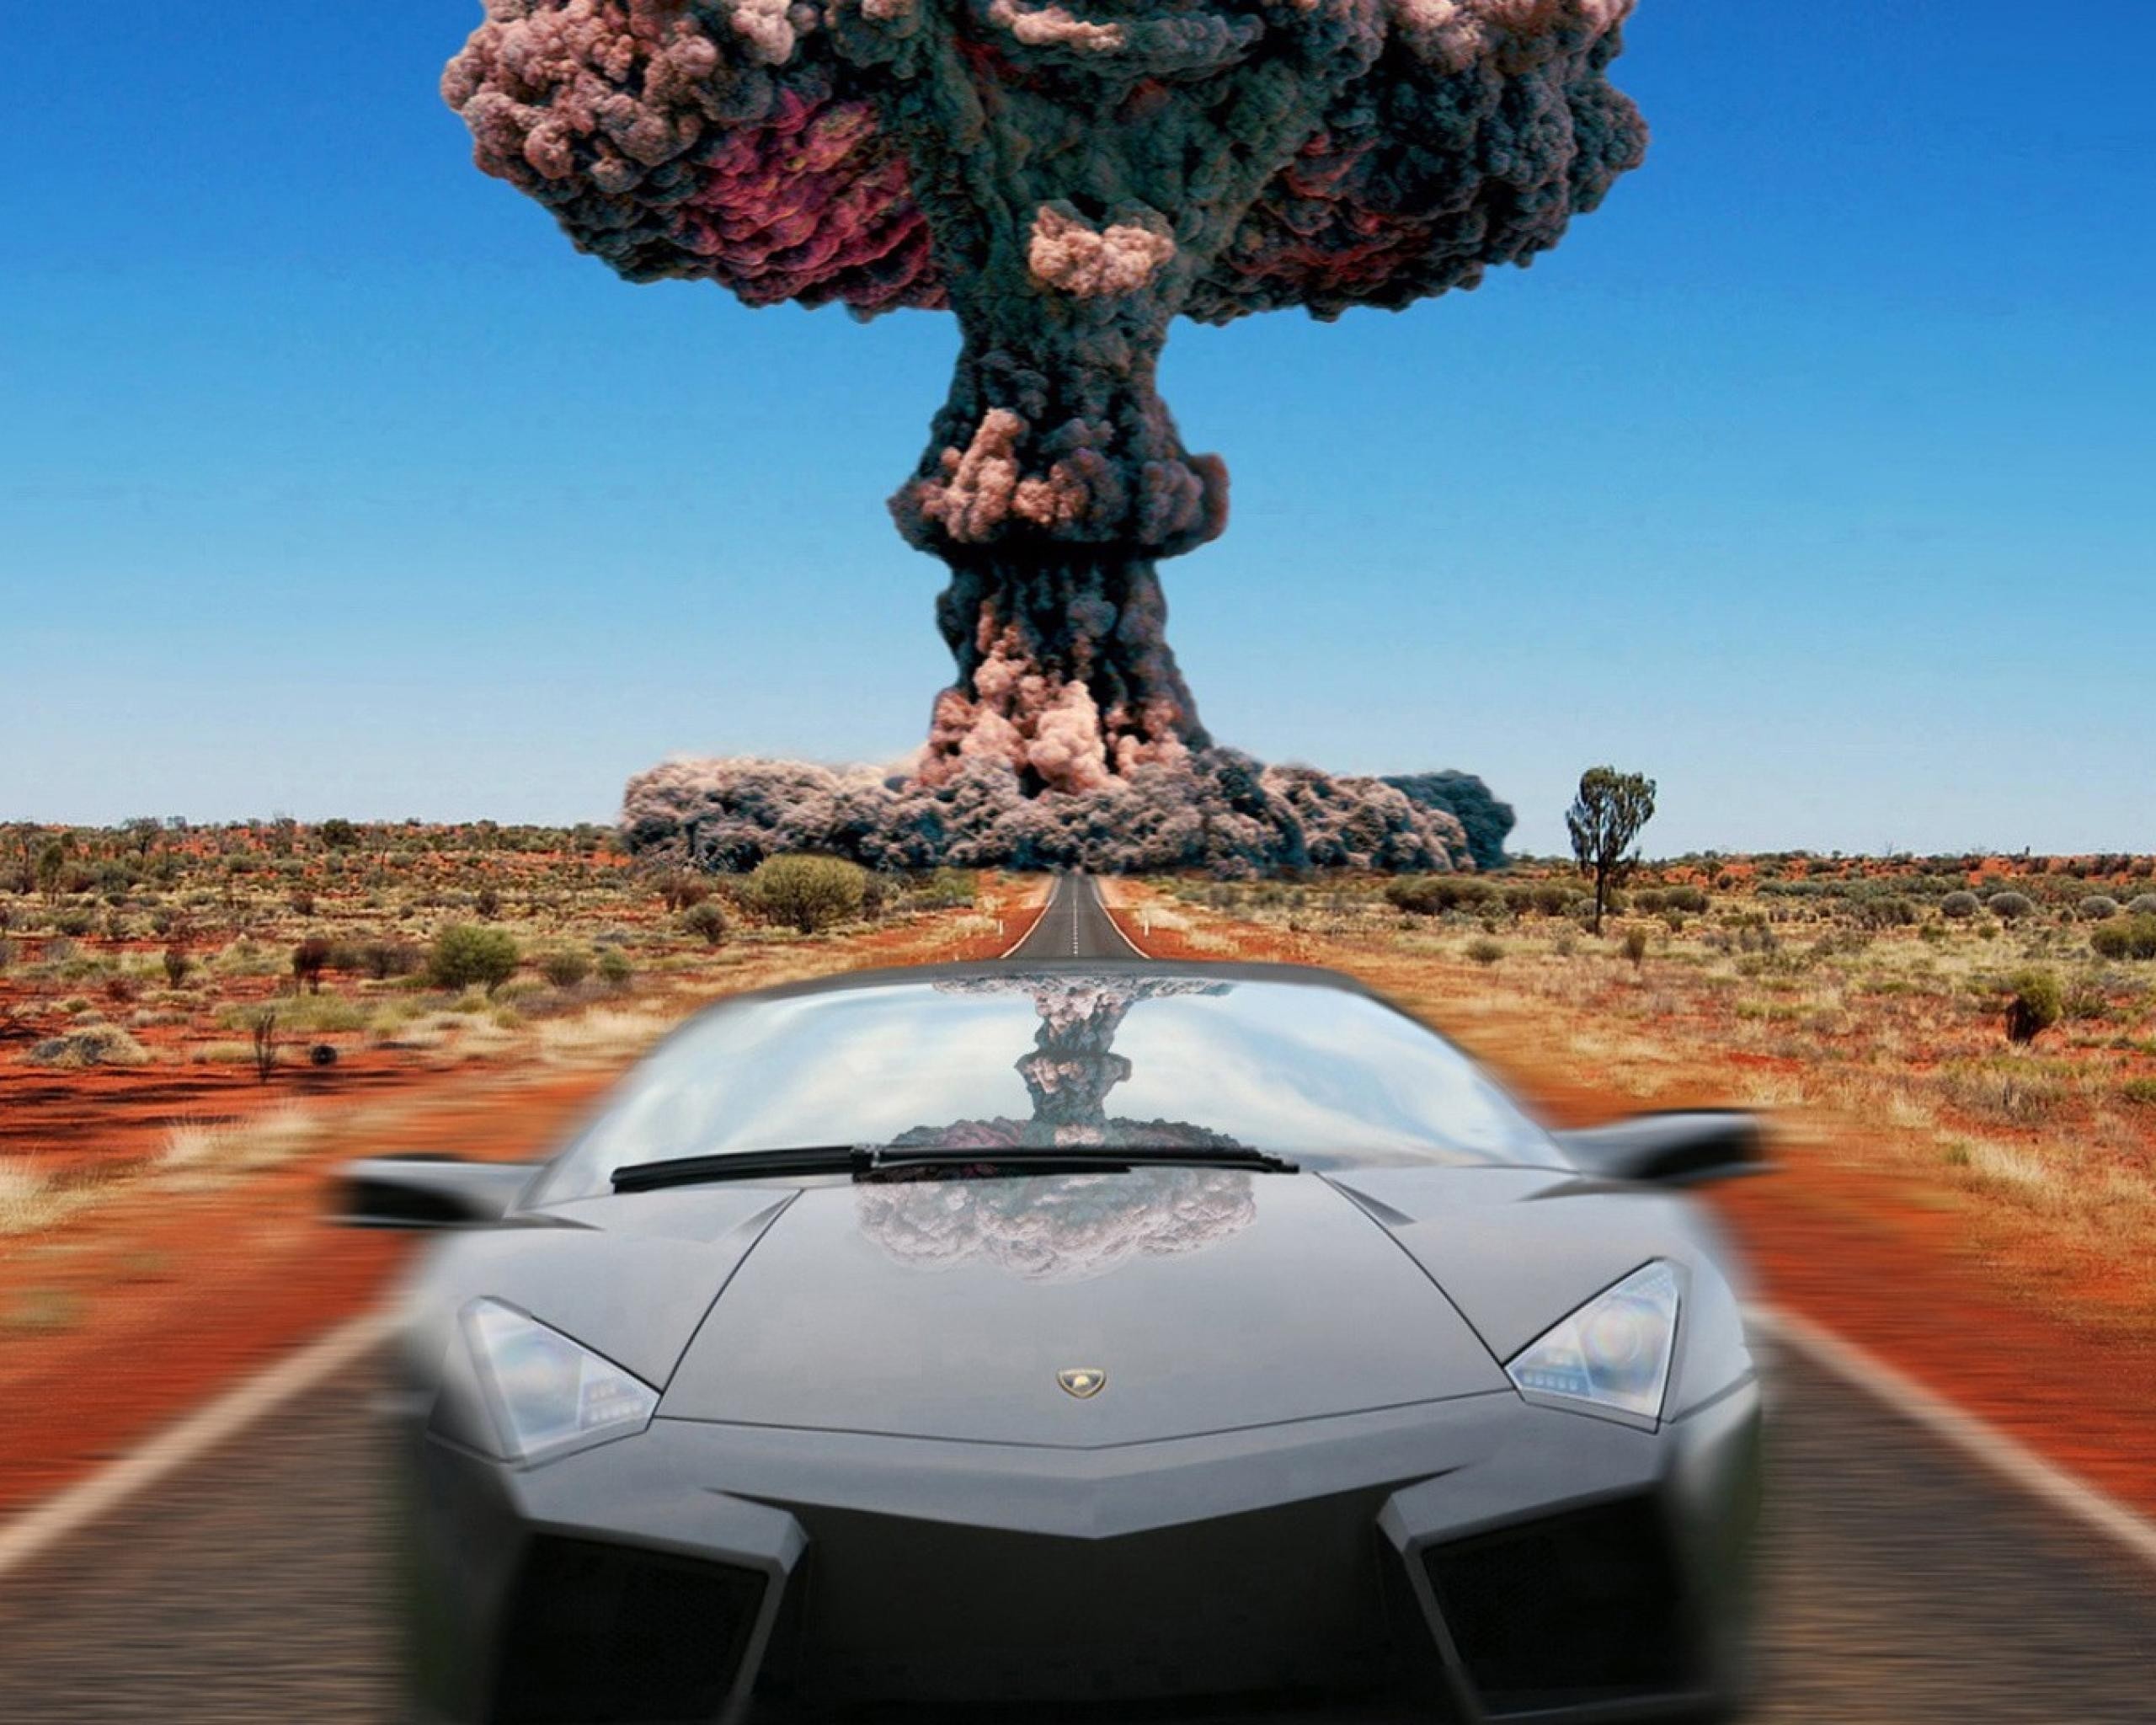 General 2560x2048 car Lamborghini desert road supercars vehicle mushroom clouds atomic bomb italian cars Volkswagen Group